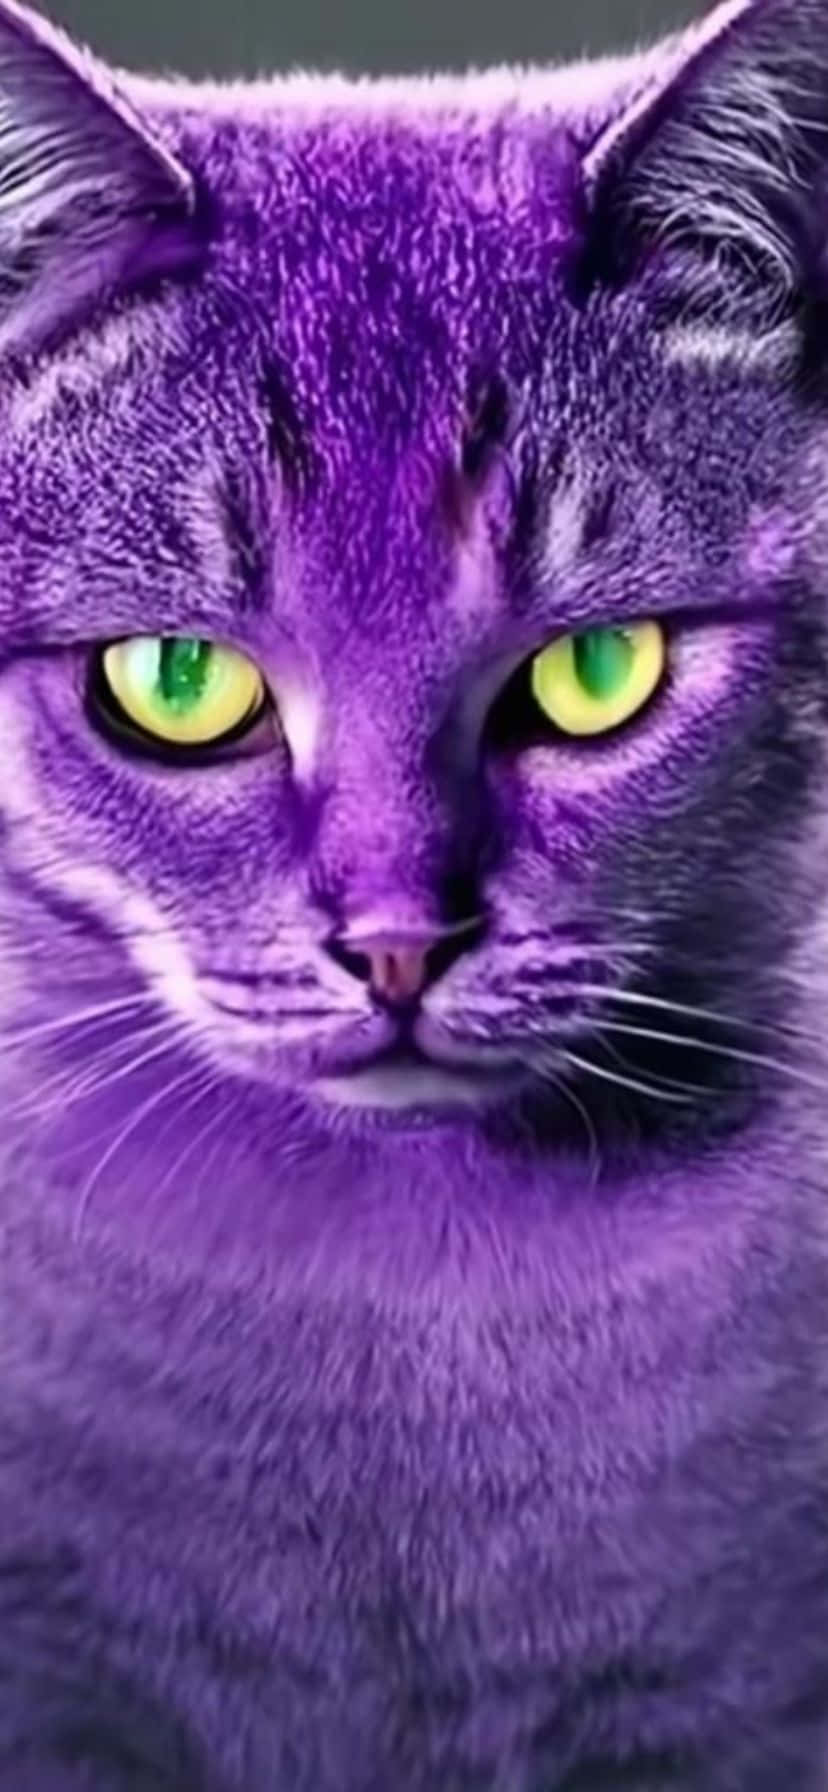 Vibrant Purple Catwith Green Eyes.jpg Wallpaper